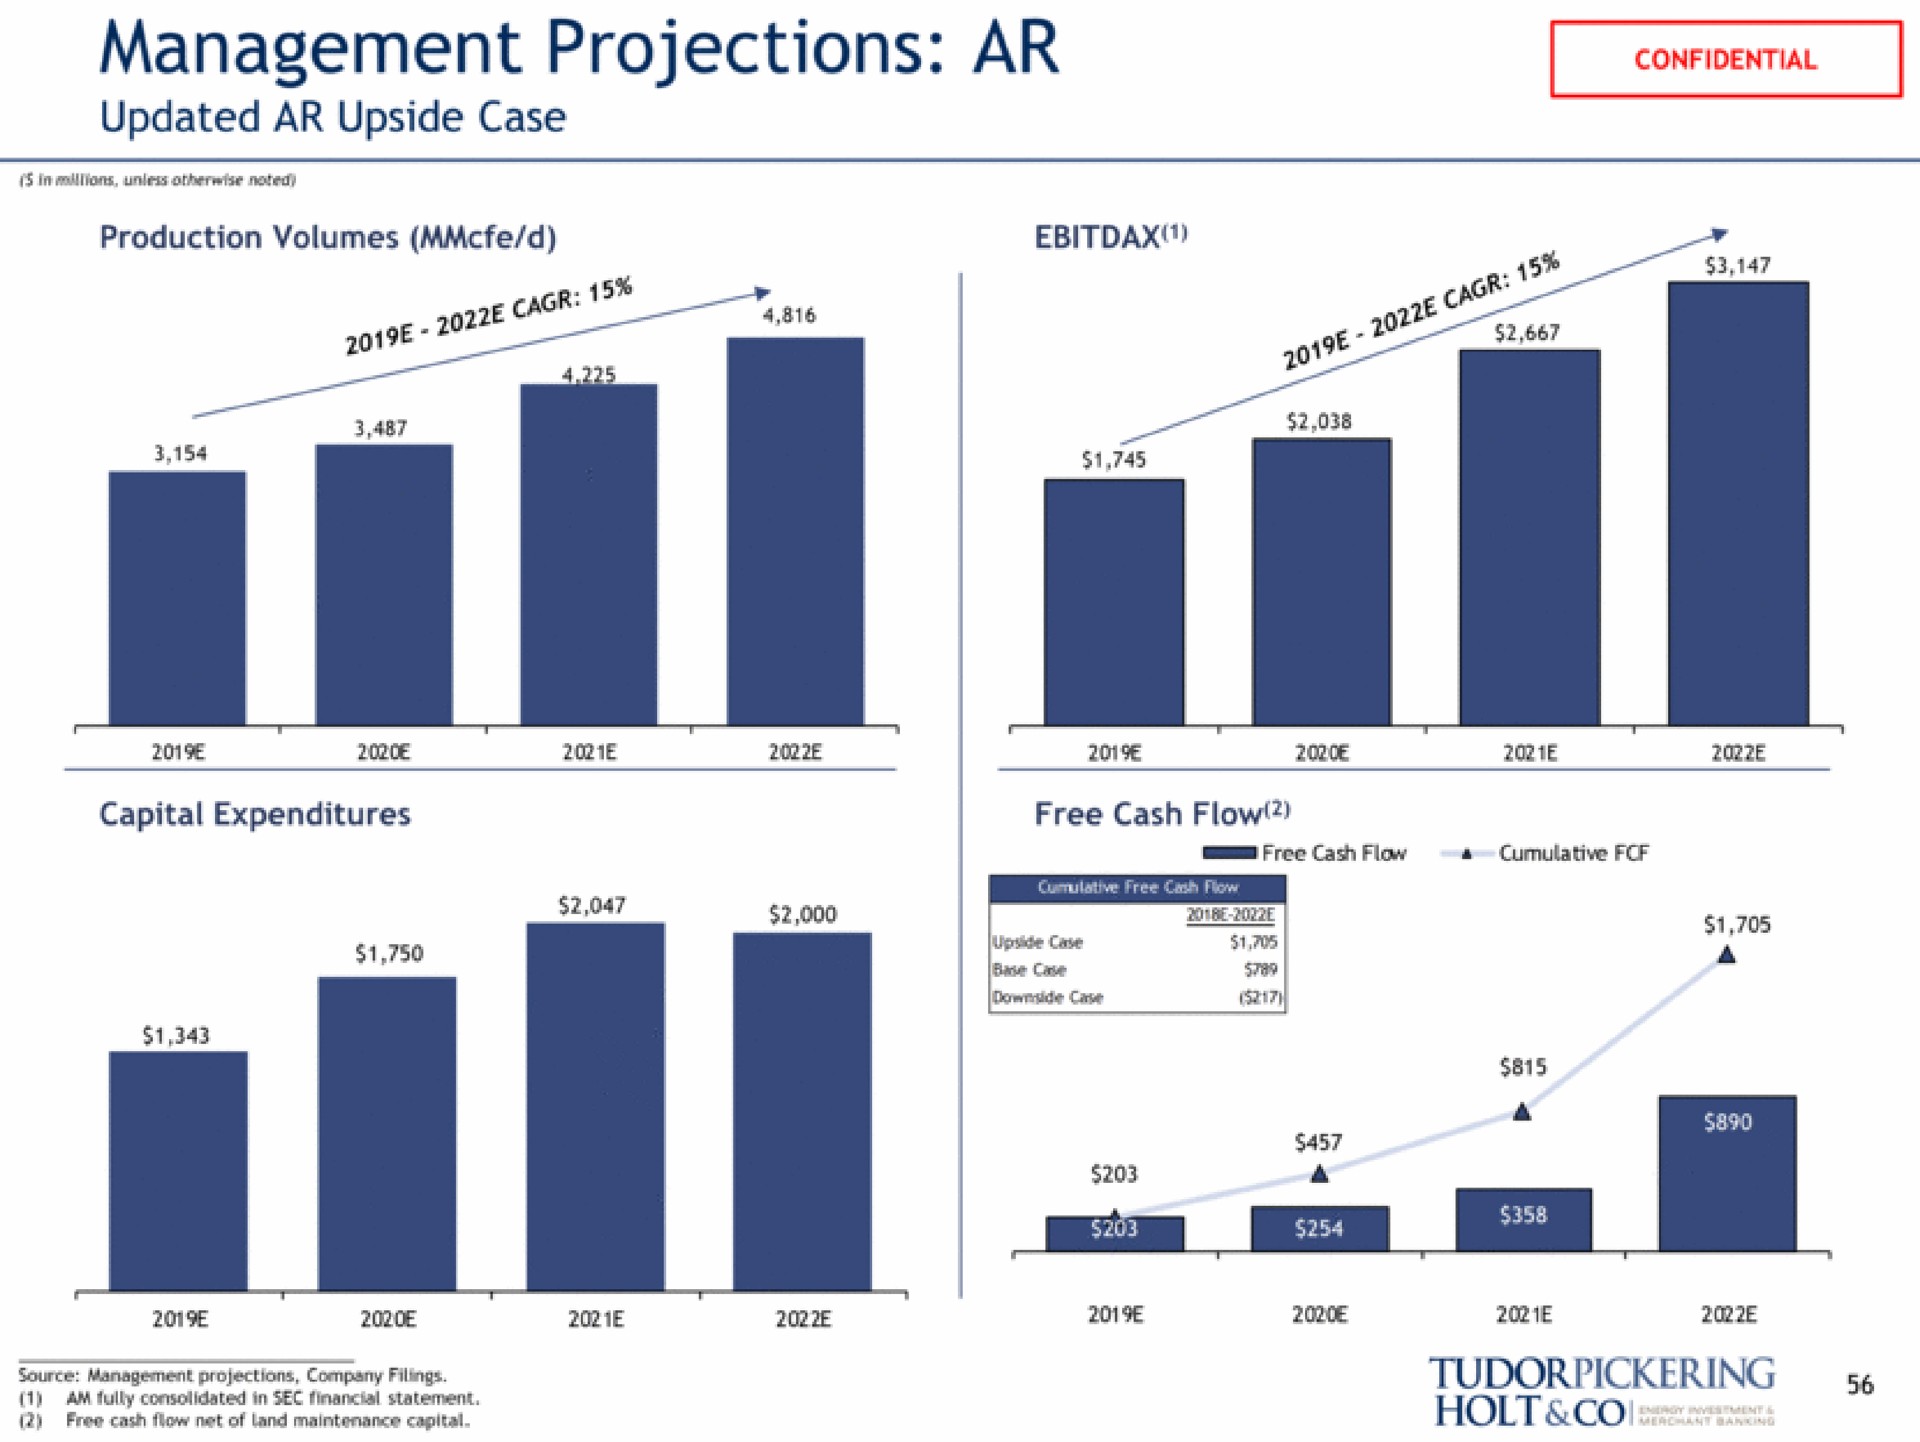 management projections updated upside case source management projections company filings | Tudor, Pickering, Holt & Co